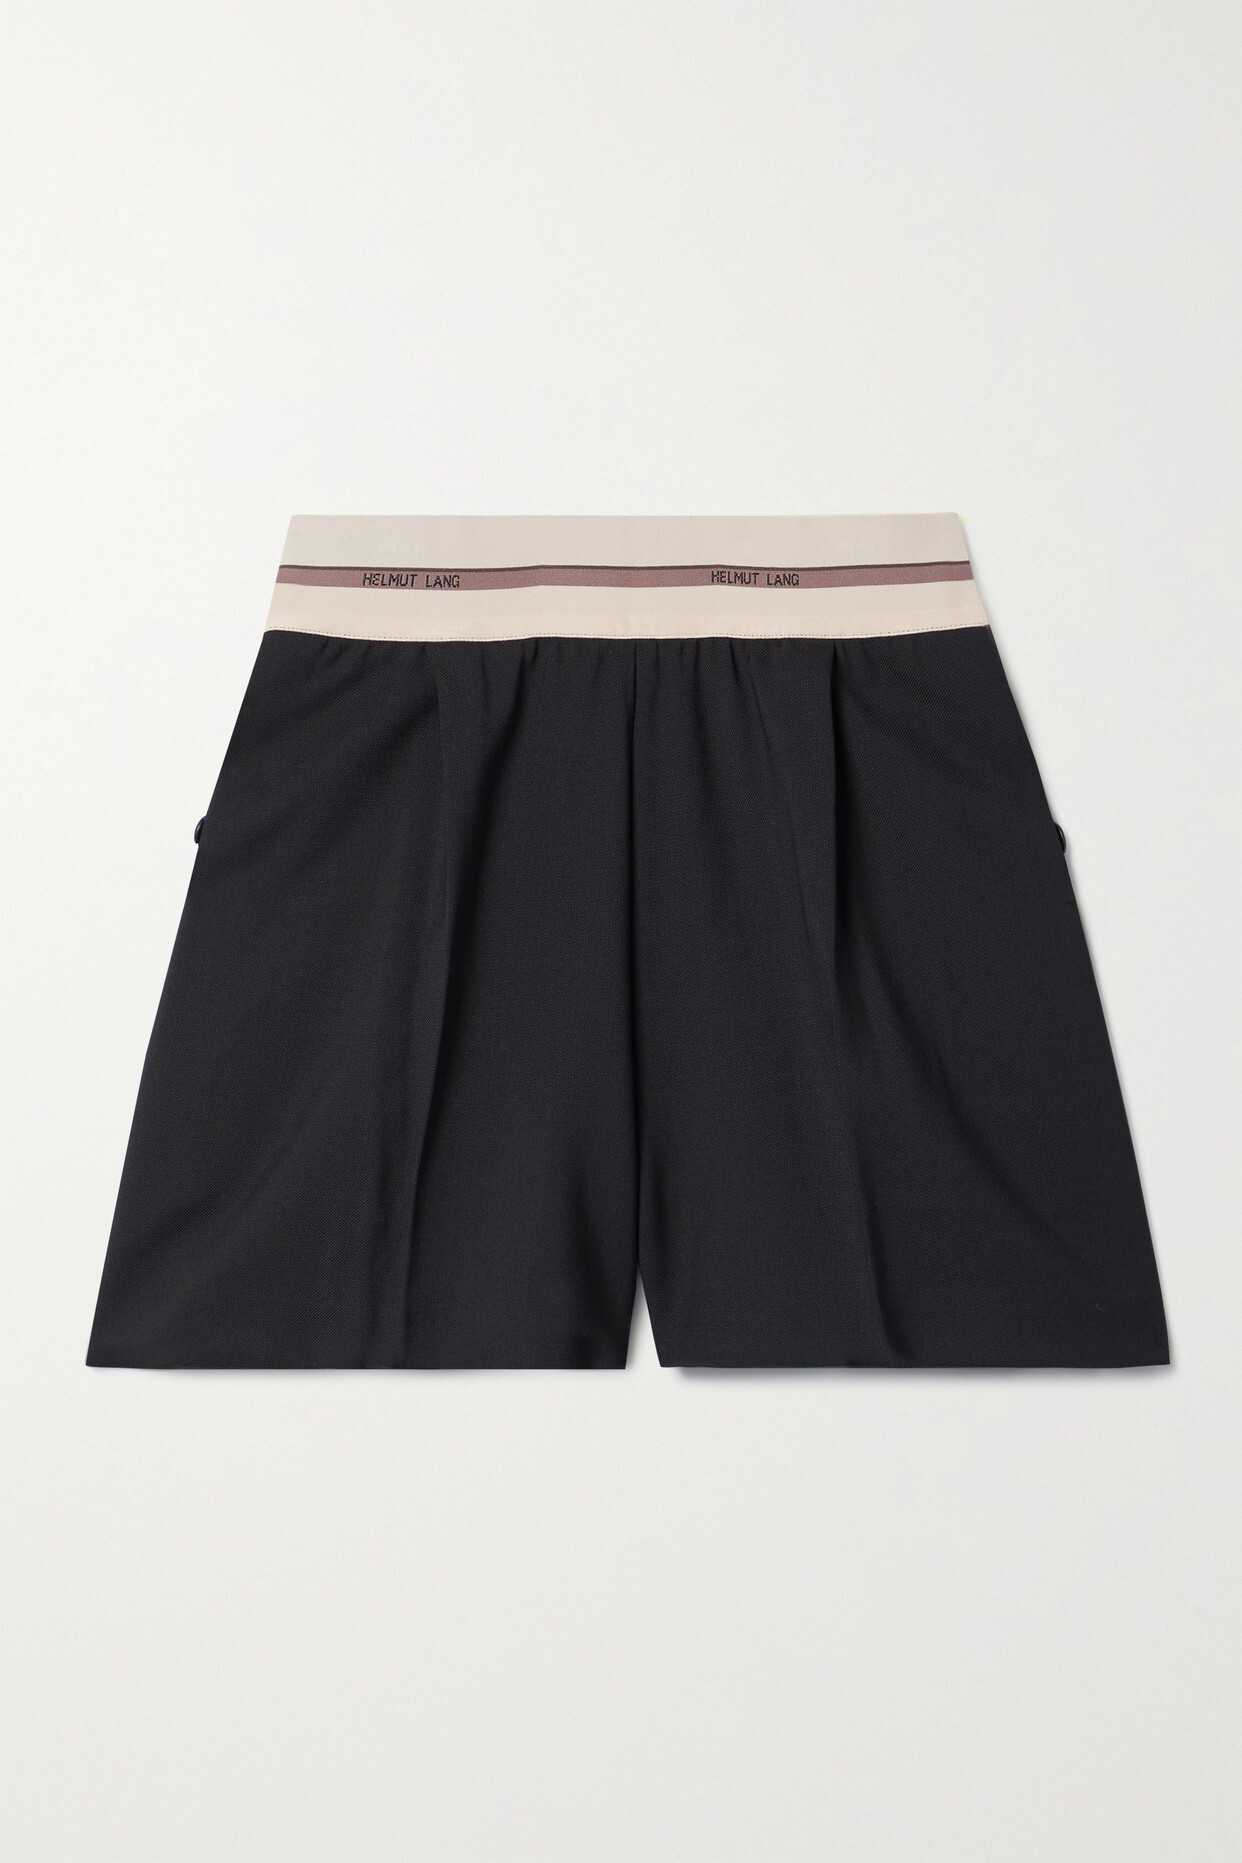 Helmut Lang - Jacquard-trimmed Pleated Wool-blend Twill Shorts - Black